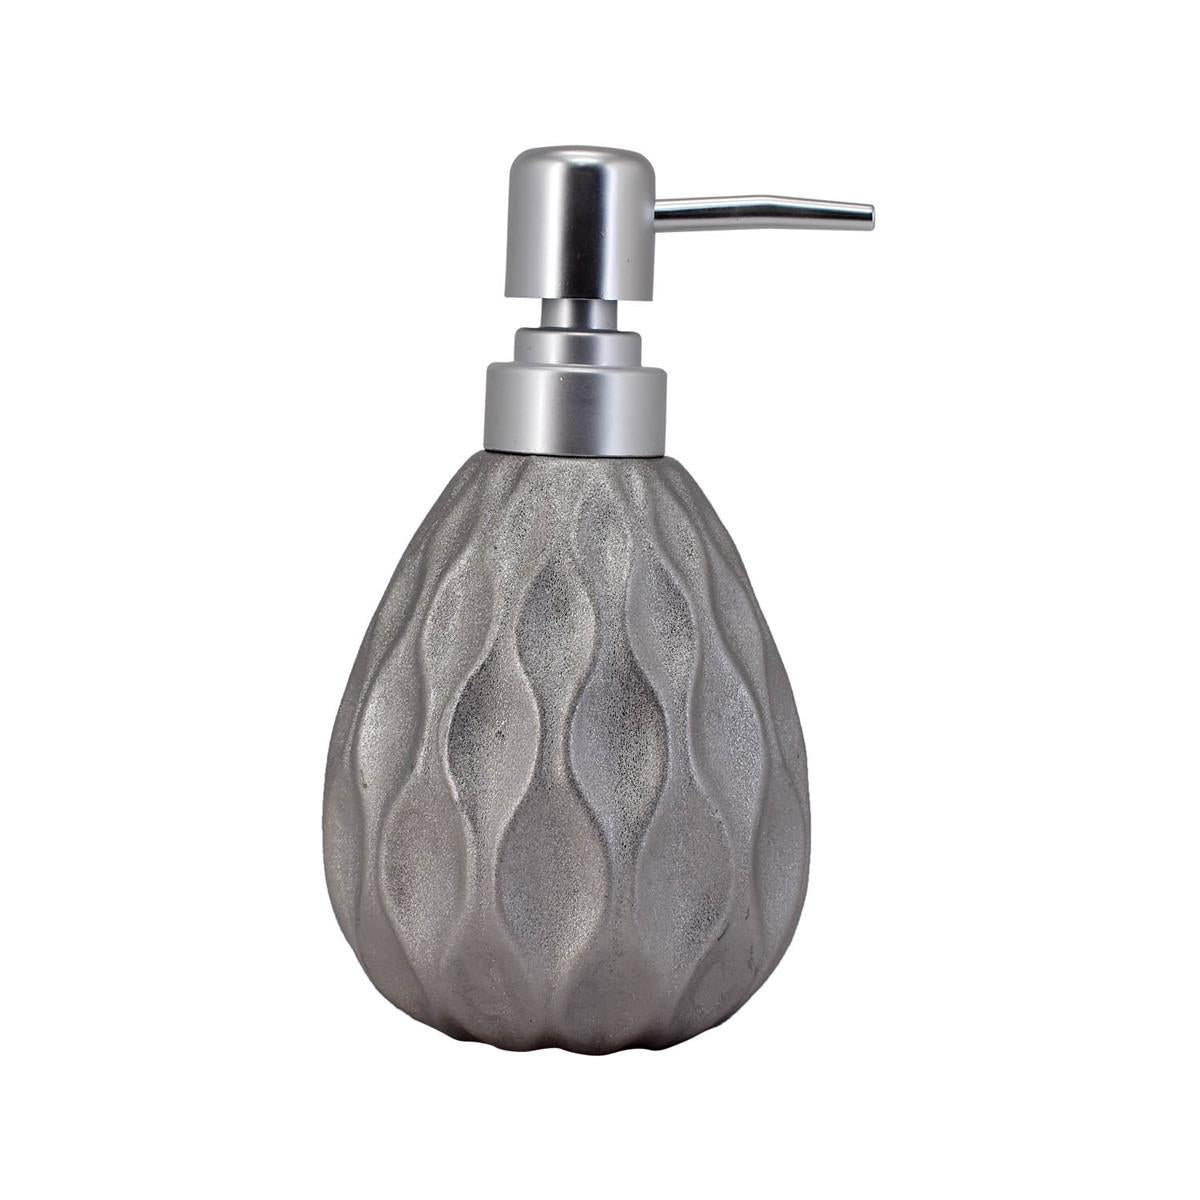 Ceramic Soap Dispenser handwash Pump for Bathroom, Set of 1, Silver (7630)